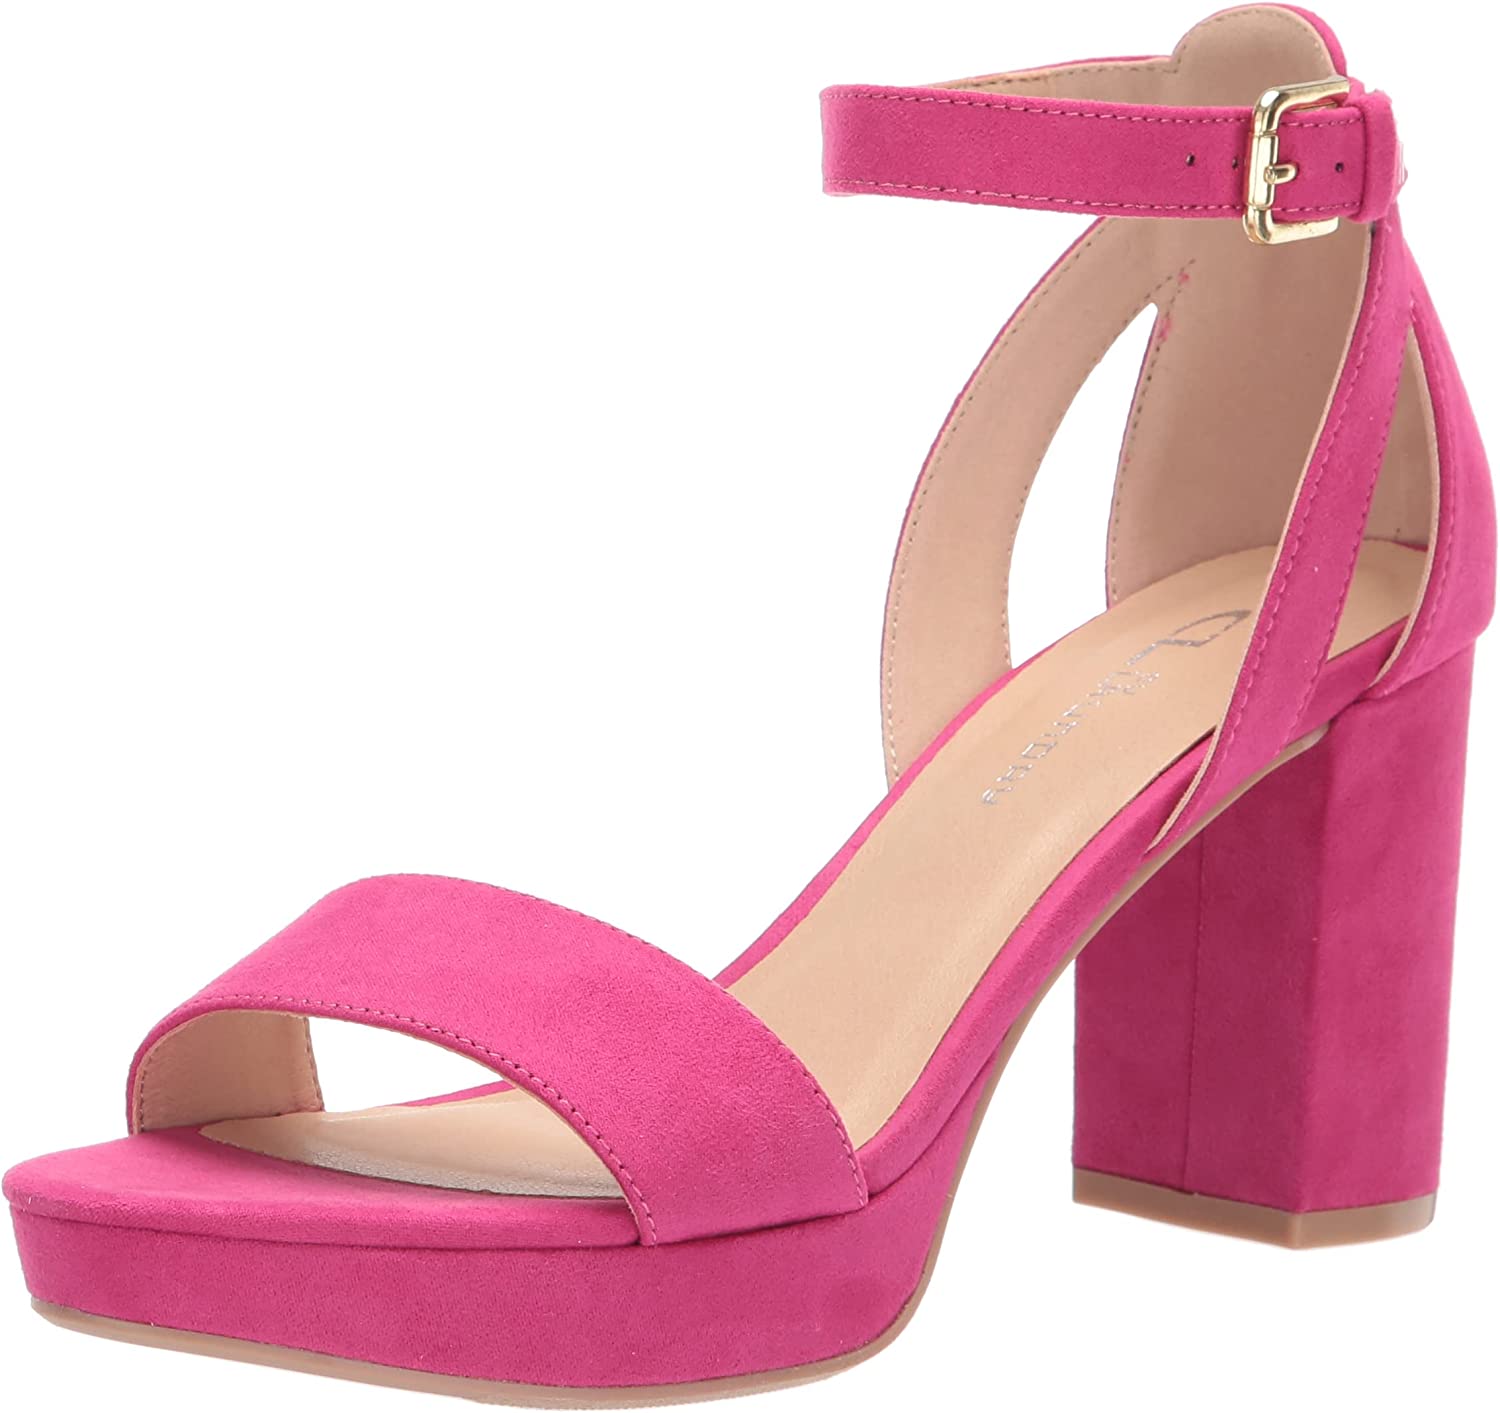 Go On Block Heel Sandal - Hot Pink - Brazos Avenue Market 